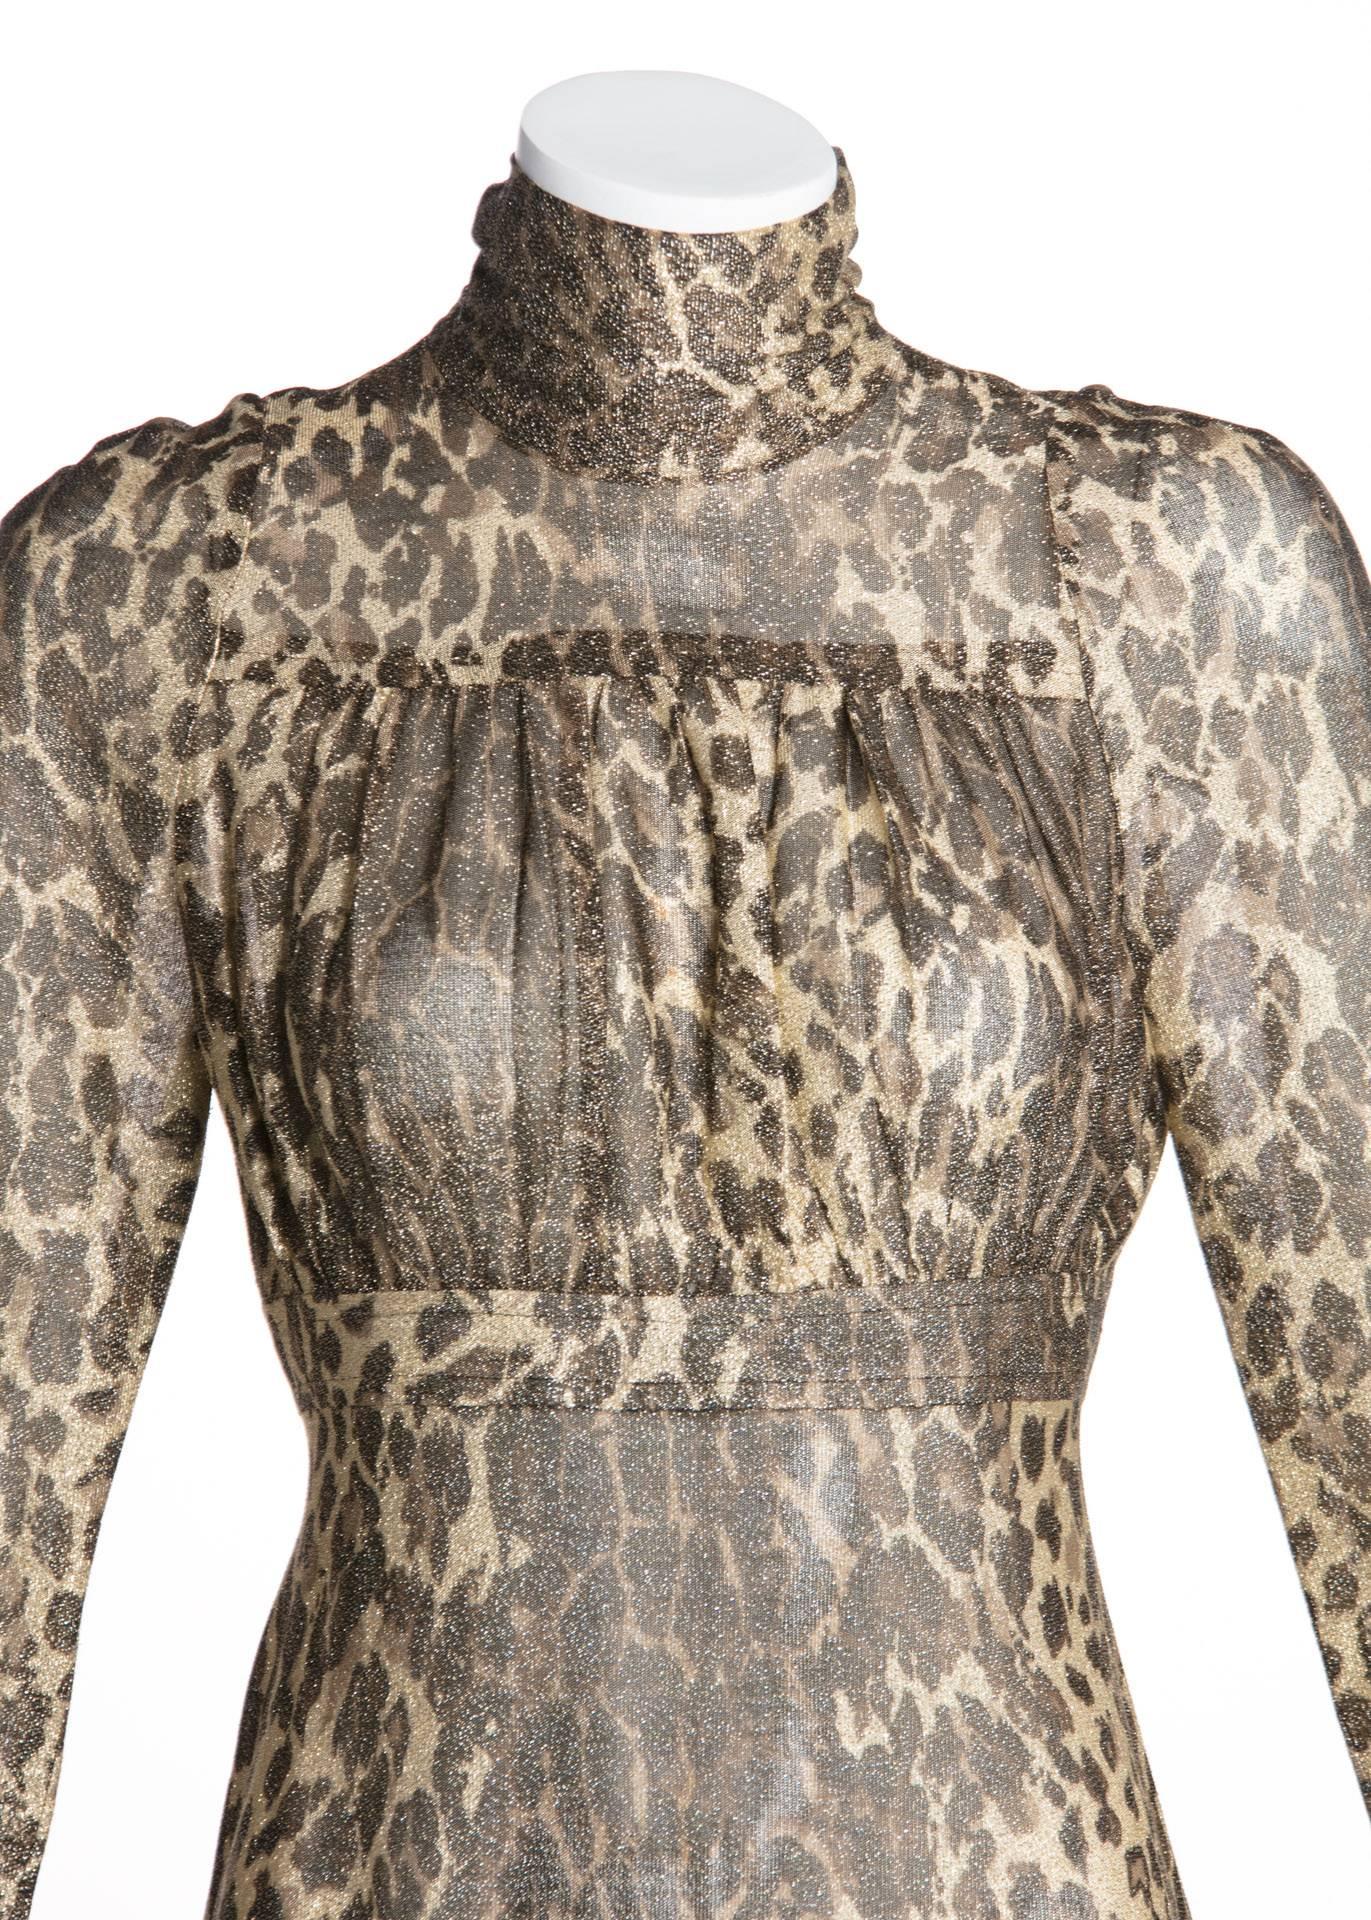 Women's 1970s Janice Wainwright Empire Waist Metallic Cheetah Print Maxi Dress For Sale